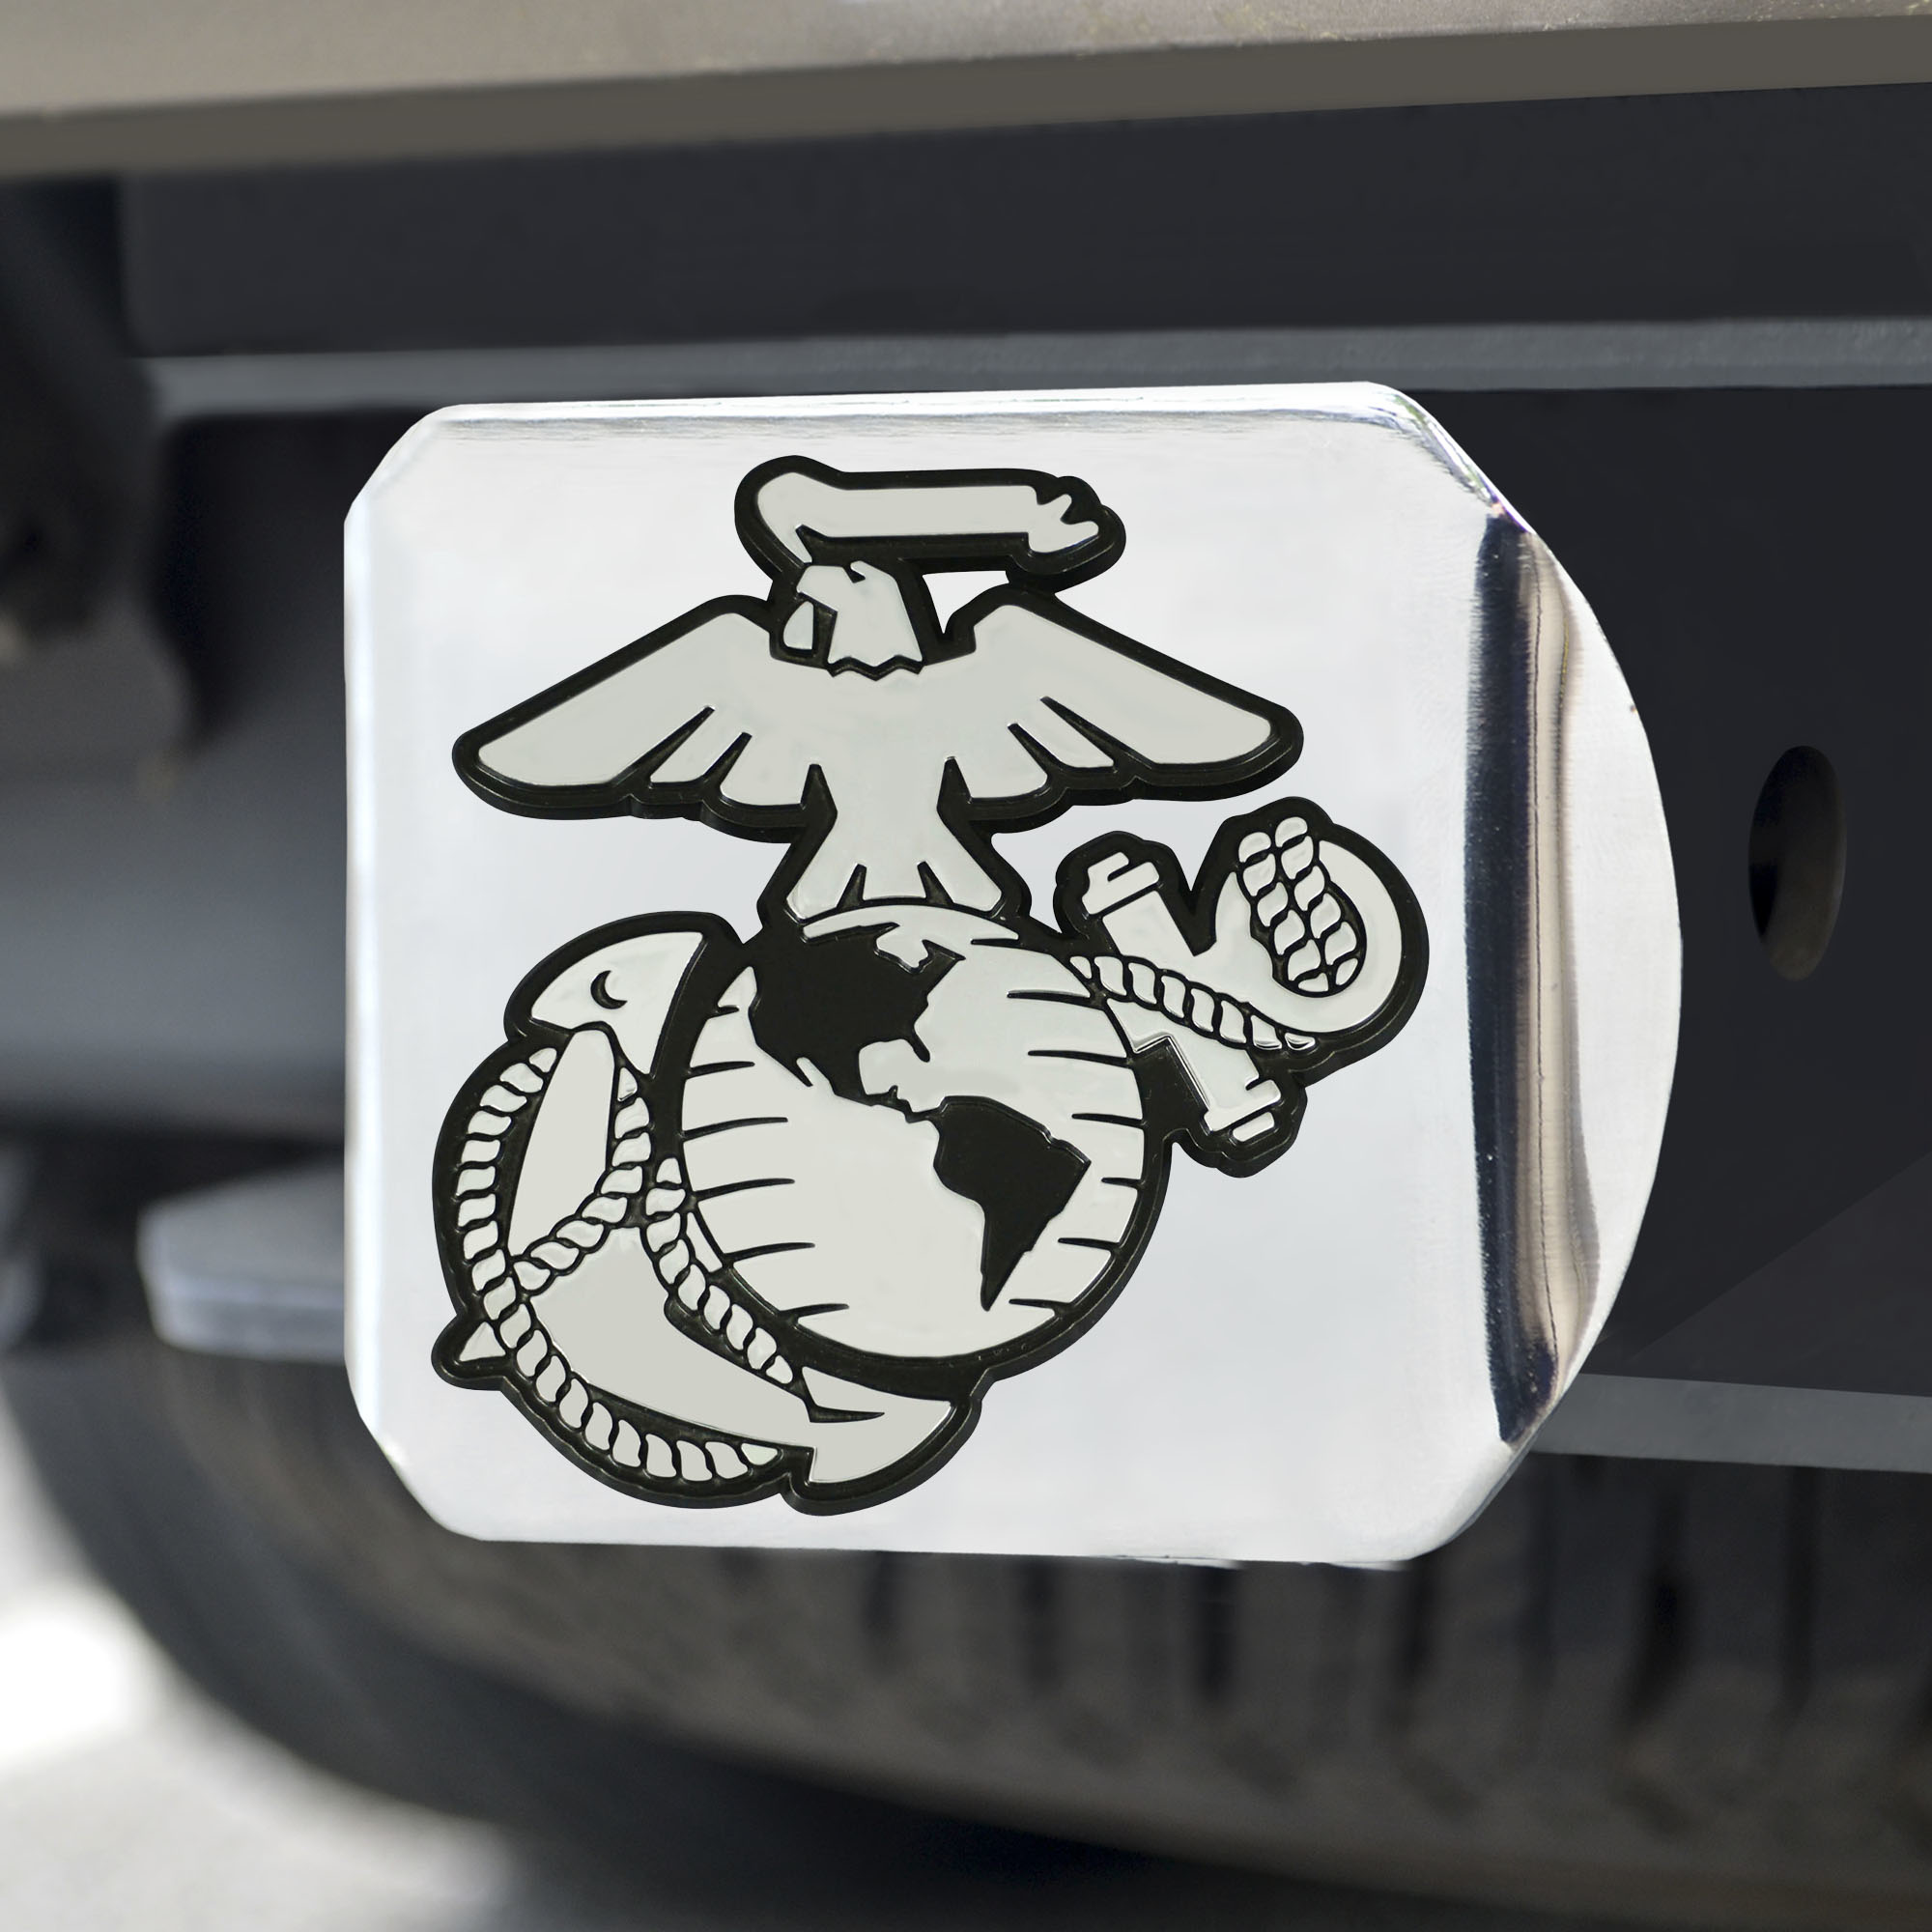 USMC Marine Emblem on Chrome METAL Hitch Cover